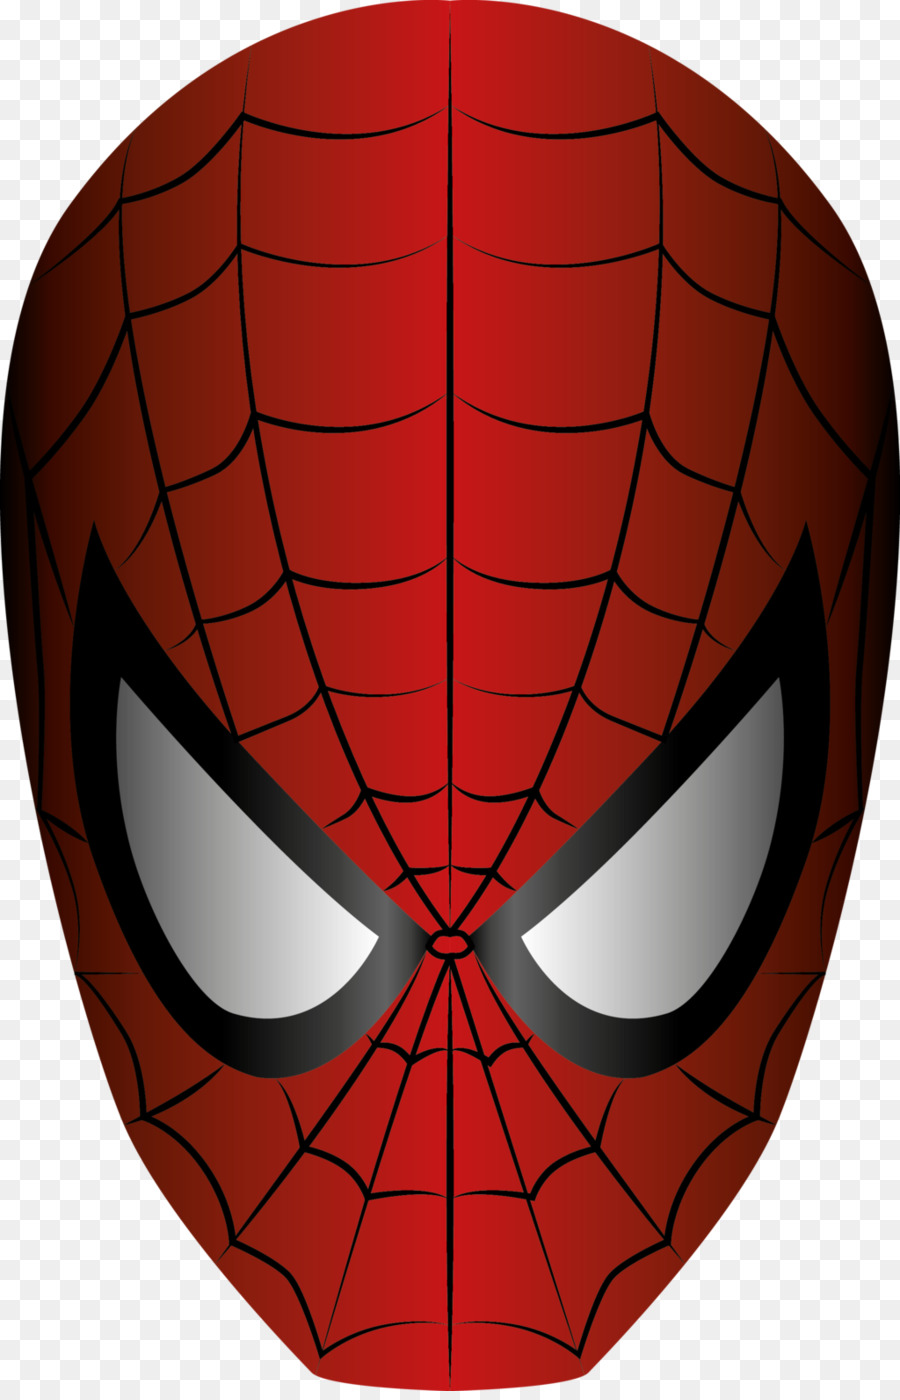  Gambar  Kepala Spiderman Gambar  Spiderman